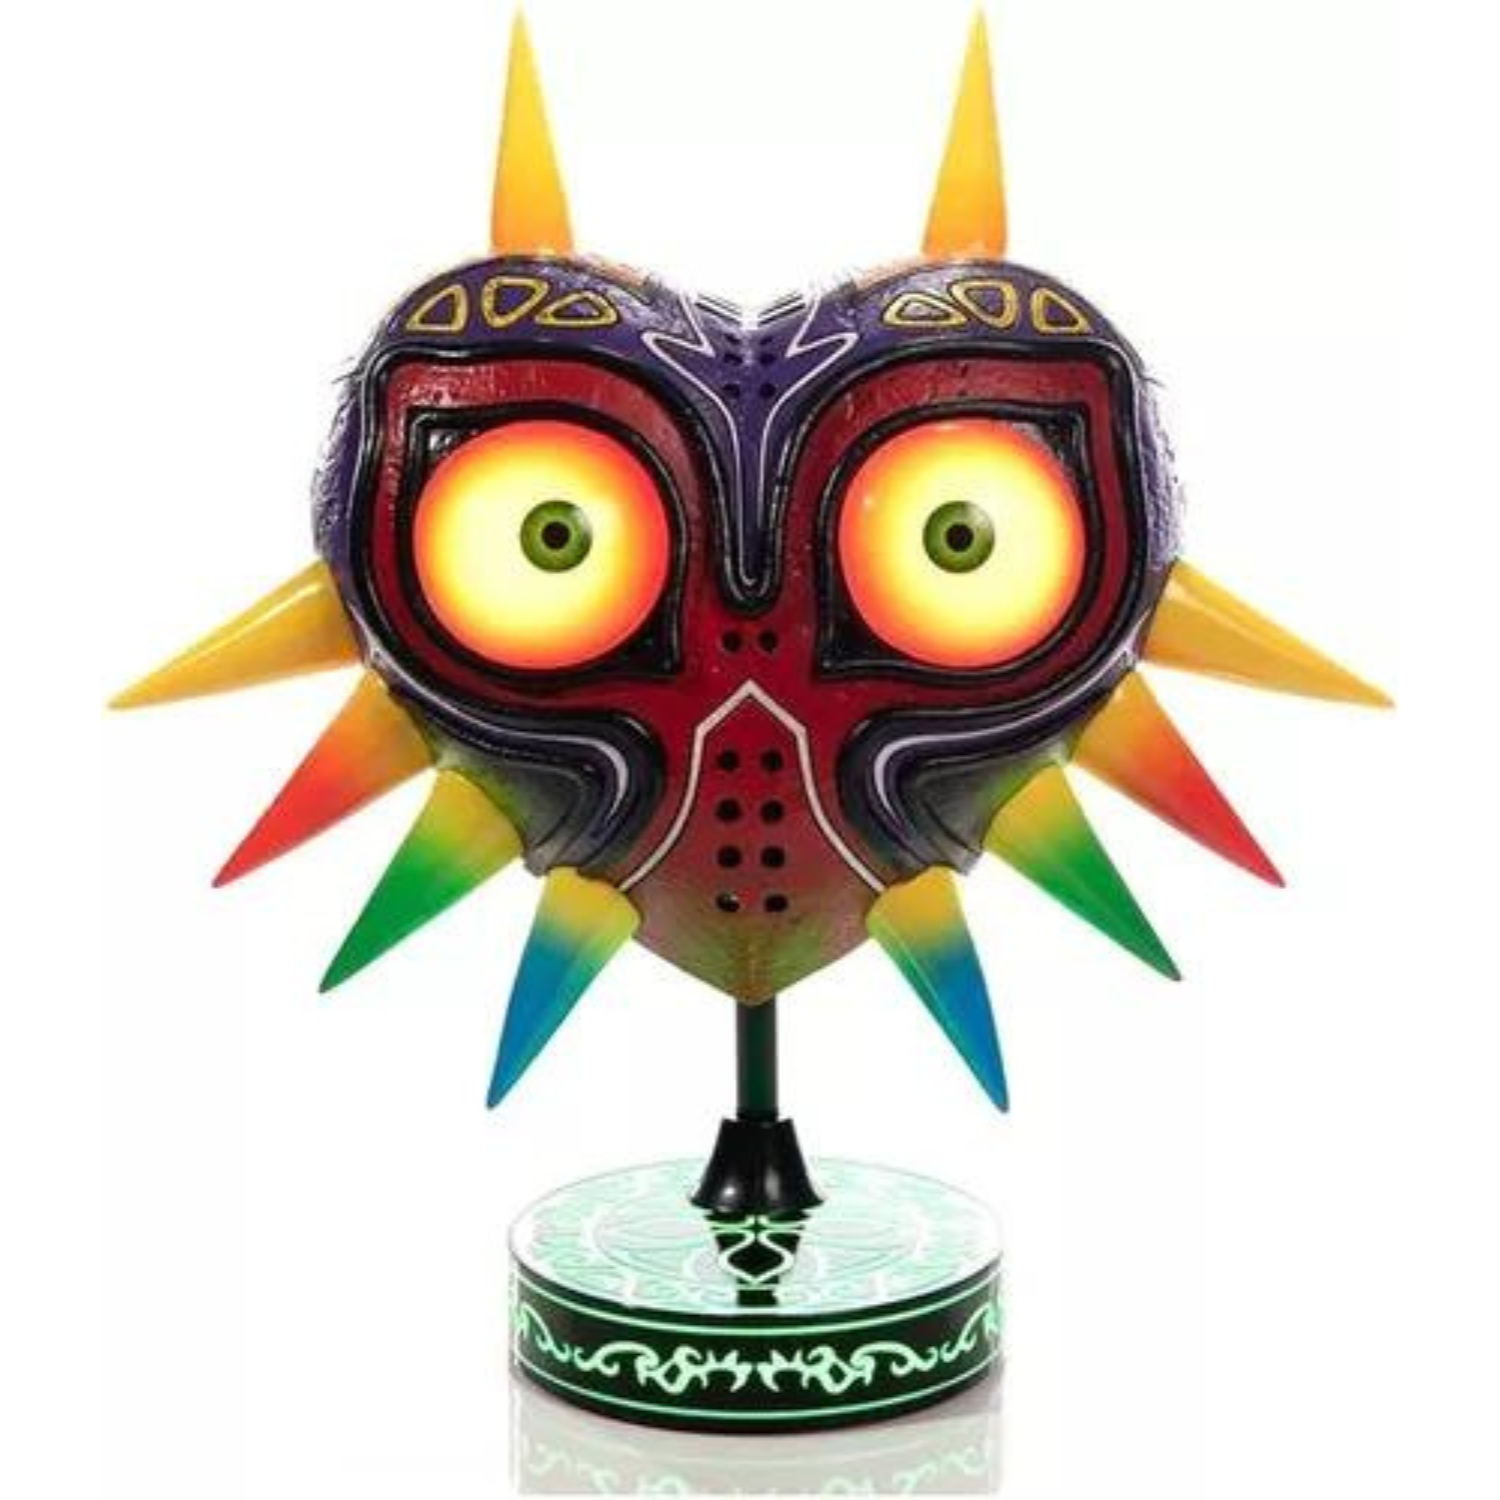 Tloz: Majora'S Mask 12" Pvc Collector'S Edition (F4F)